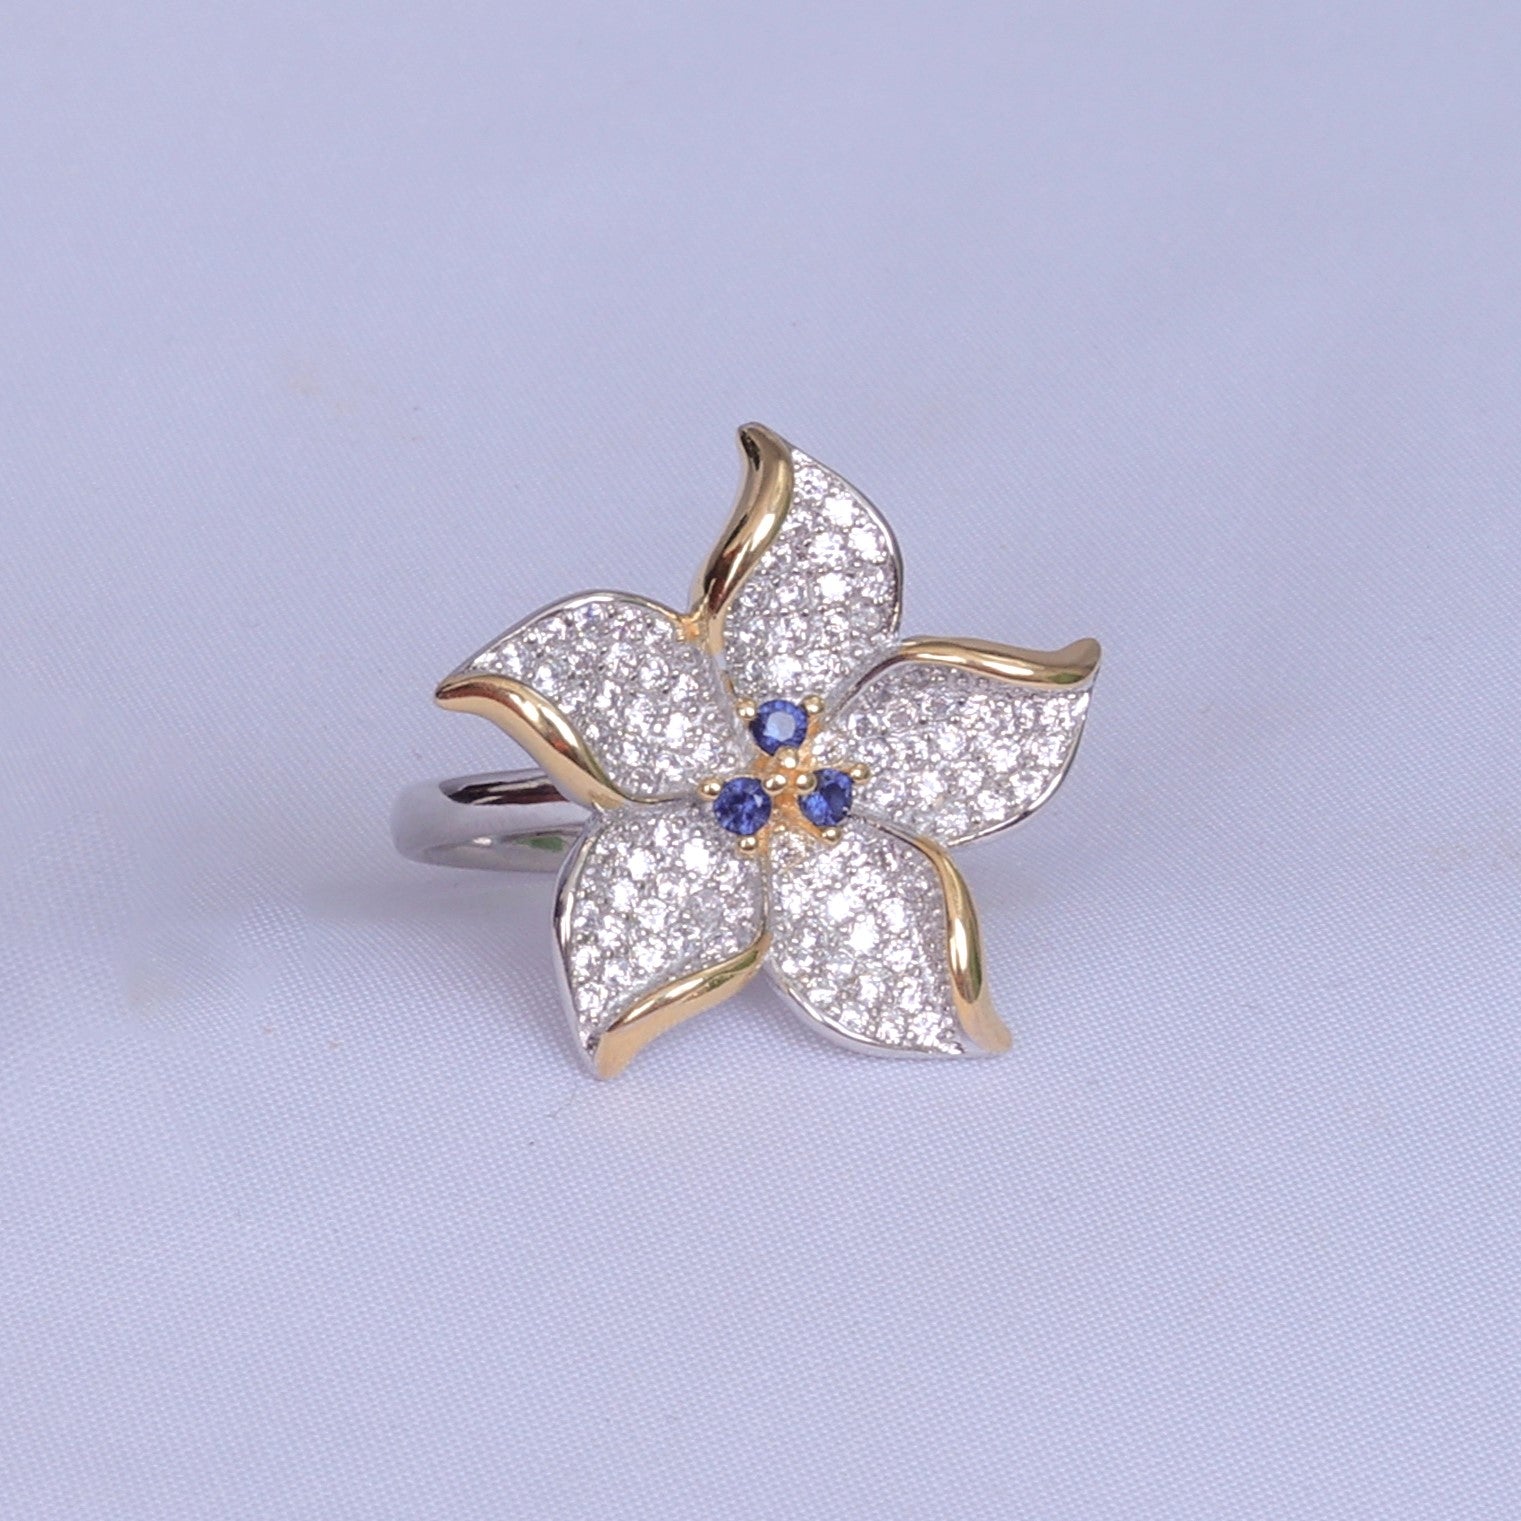 Flower Blue Colored Stones Designer Sterling Silver Ring